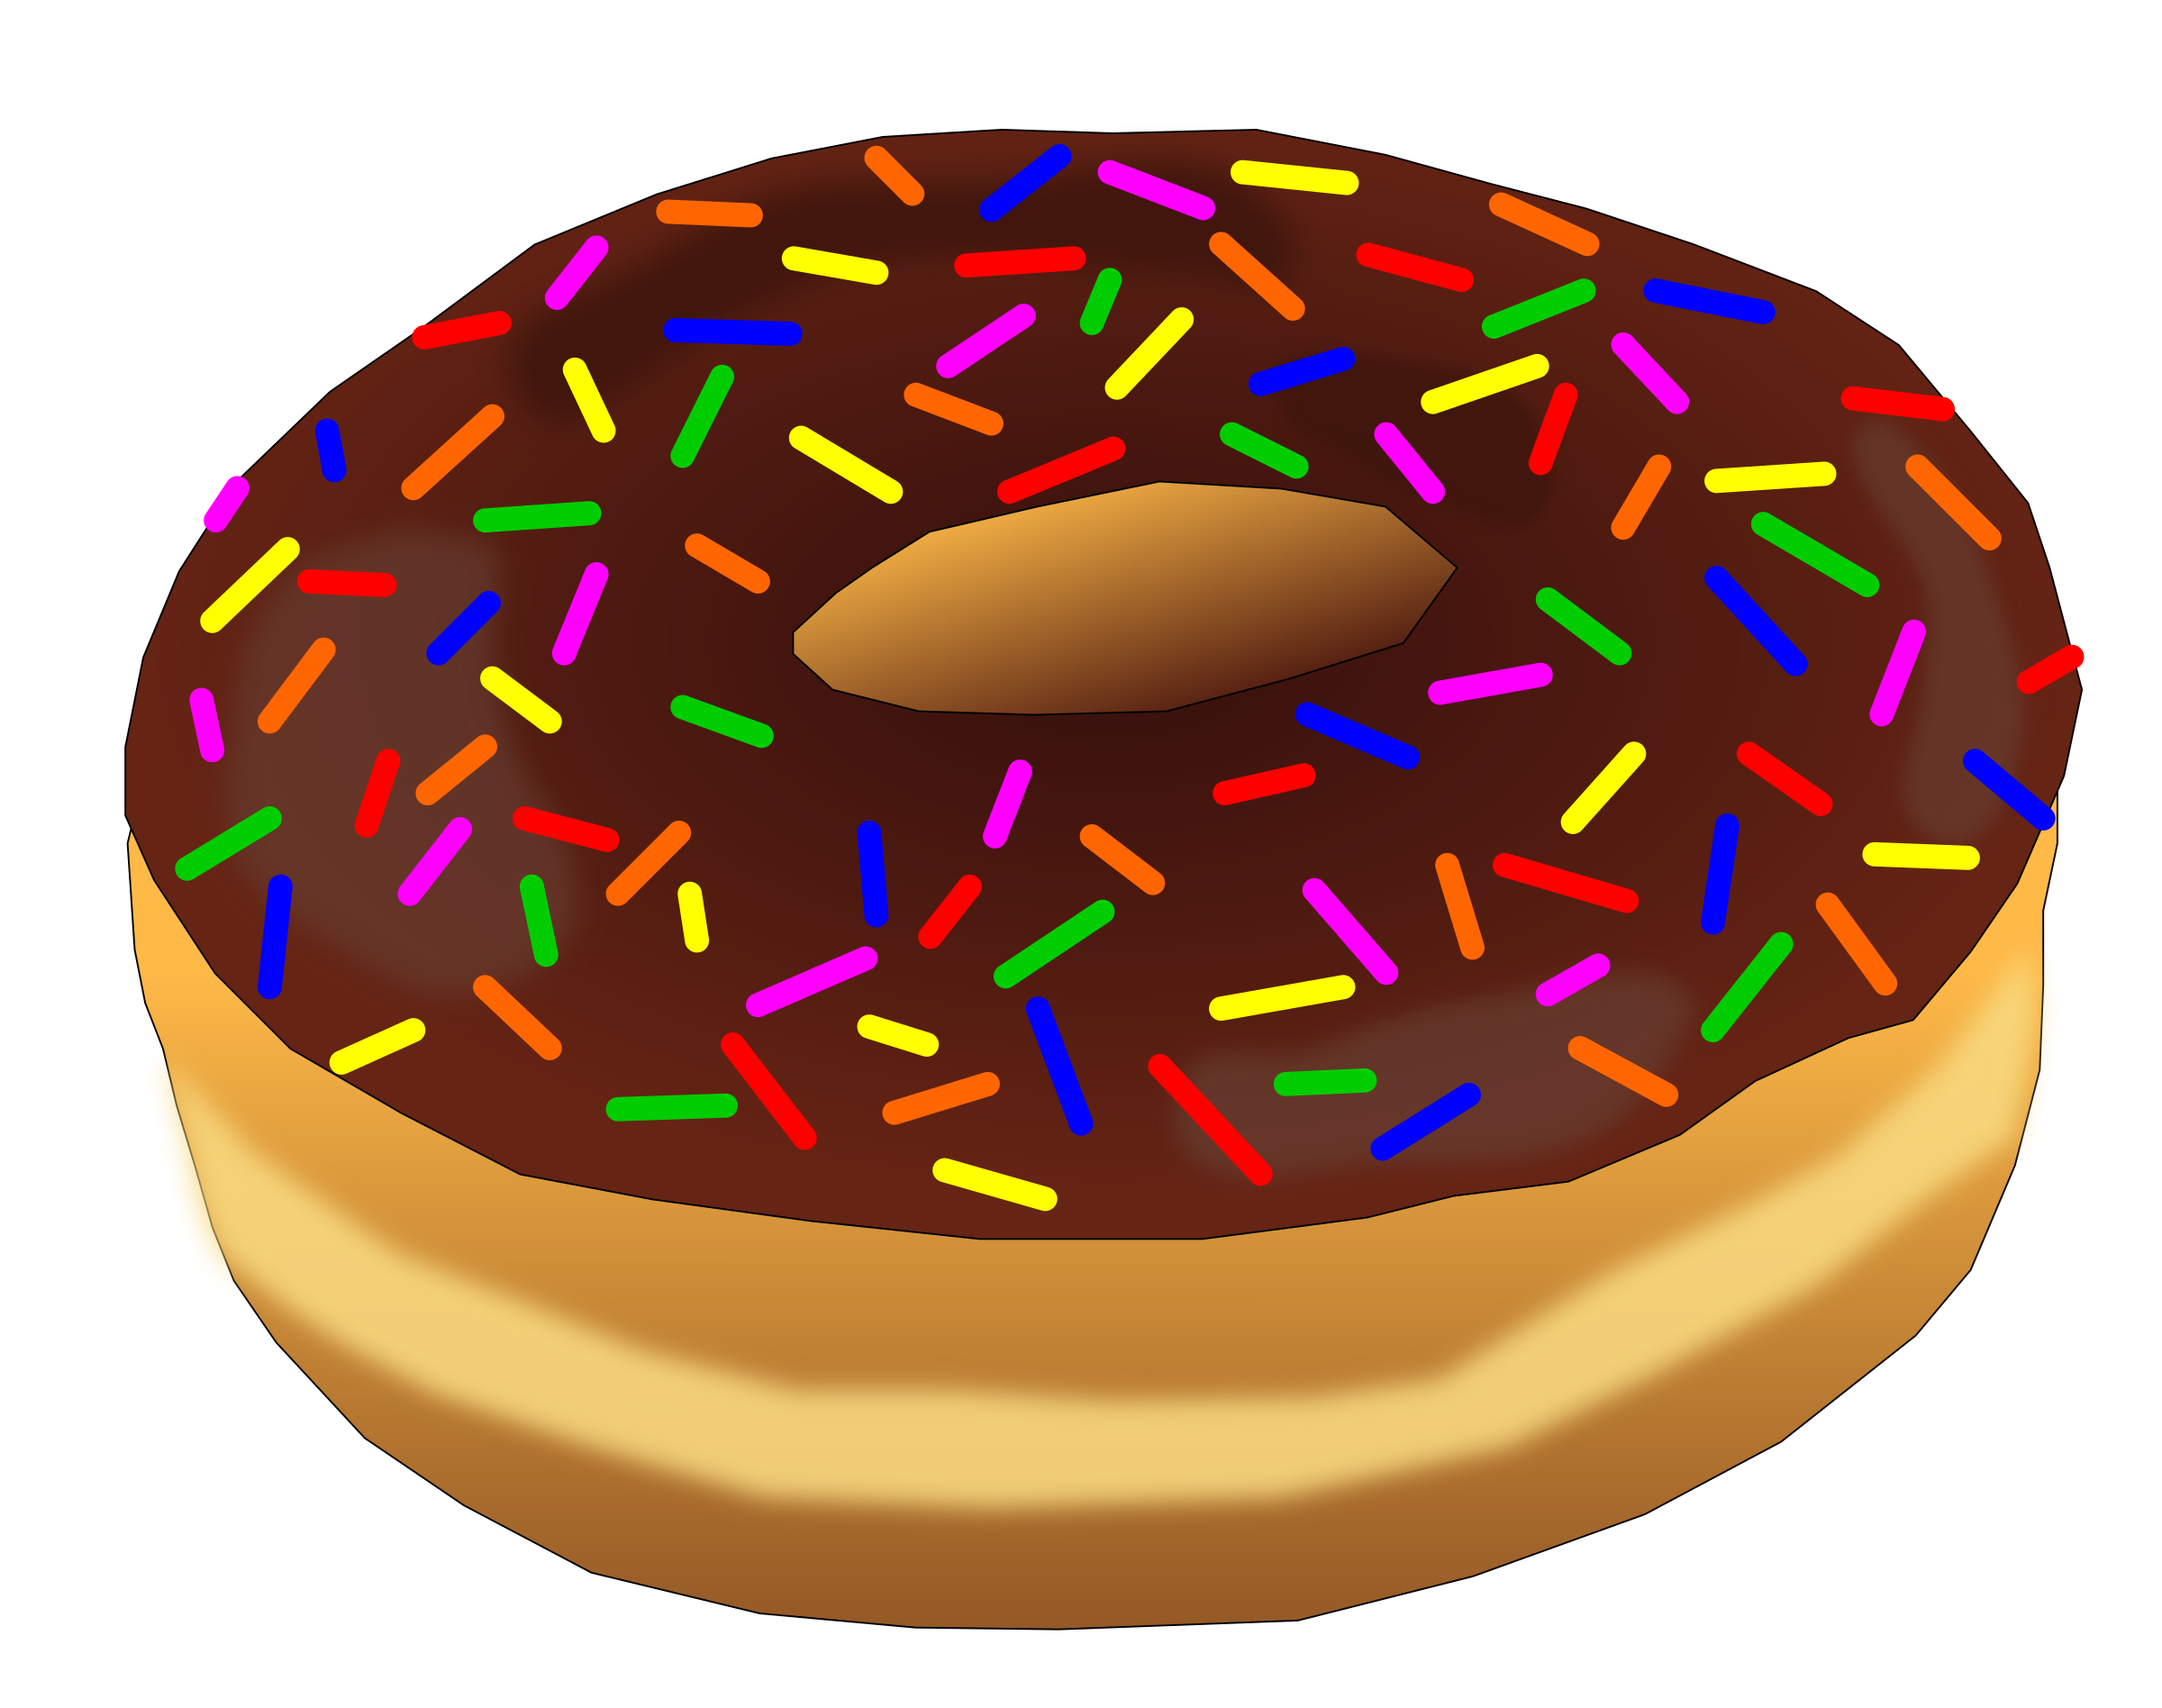 Donut With Rainbow Sprinkles Image Free Stock Photo Public Domain Photo Cc0 Images